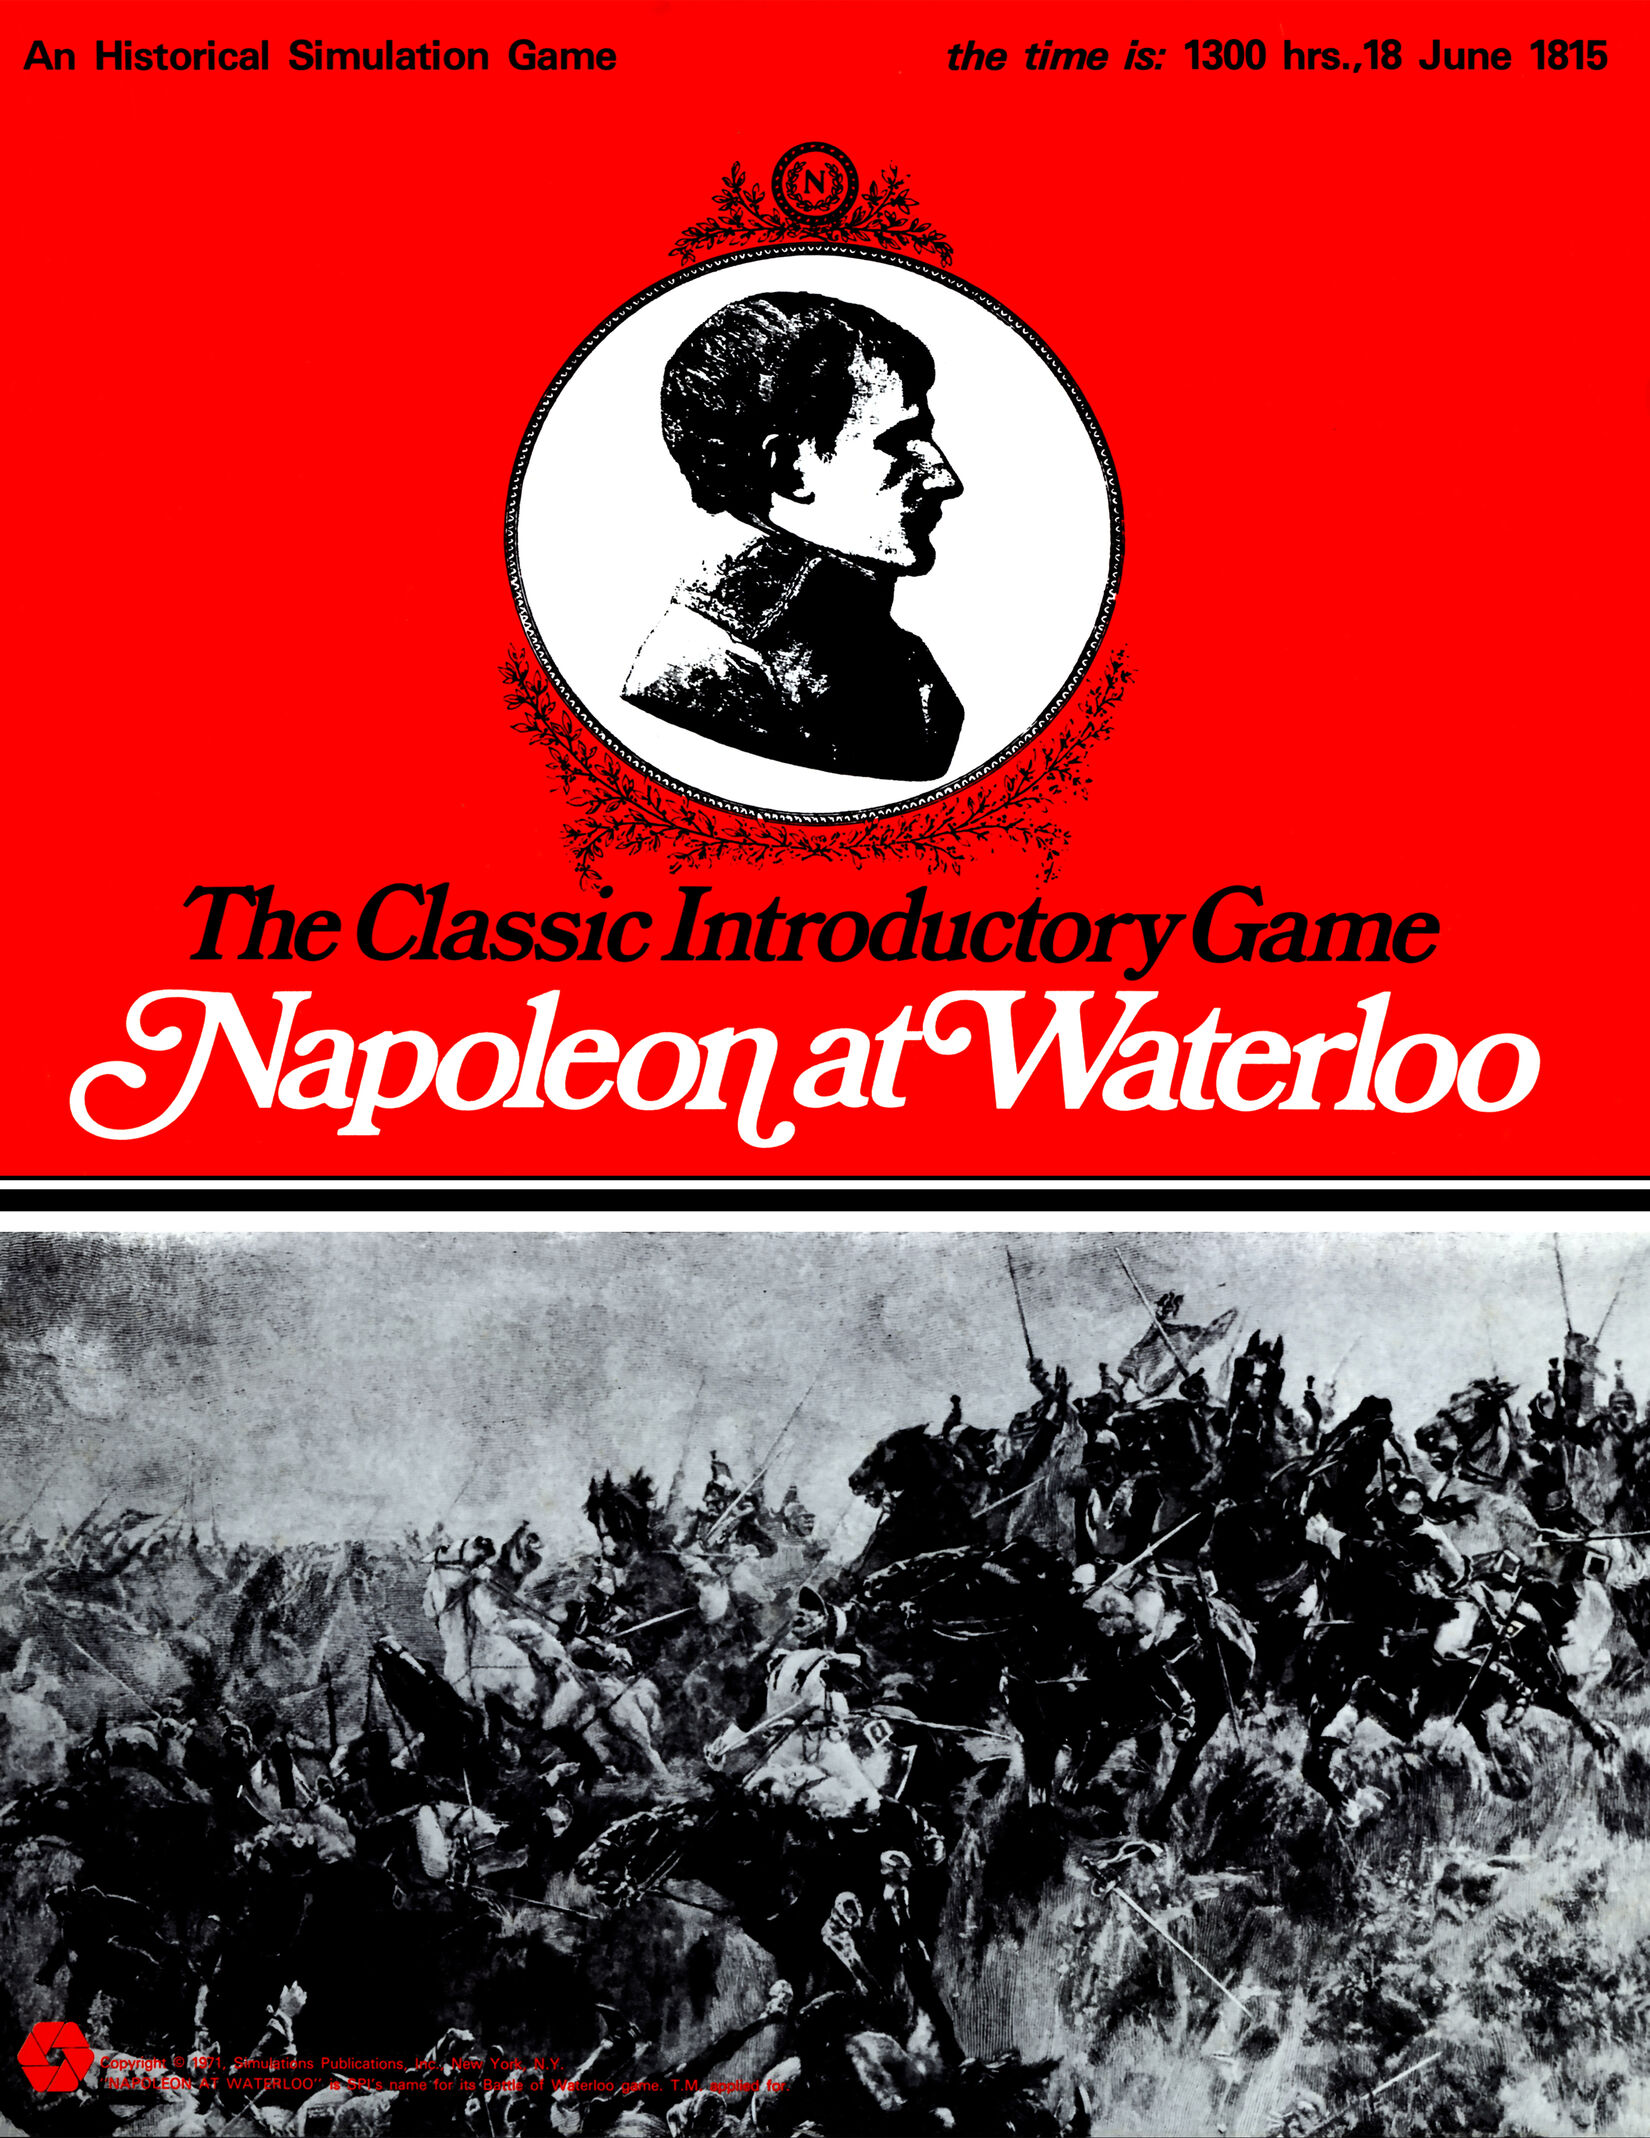 Napoleon at Waterloo Expansion